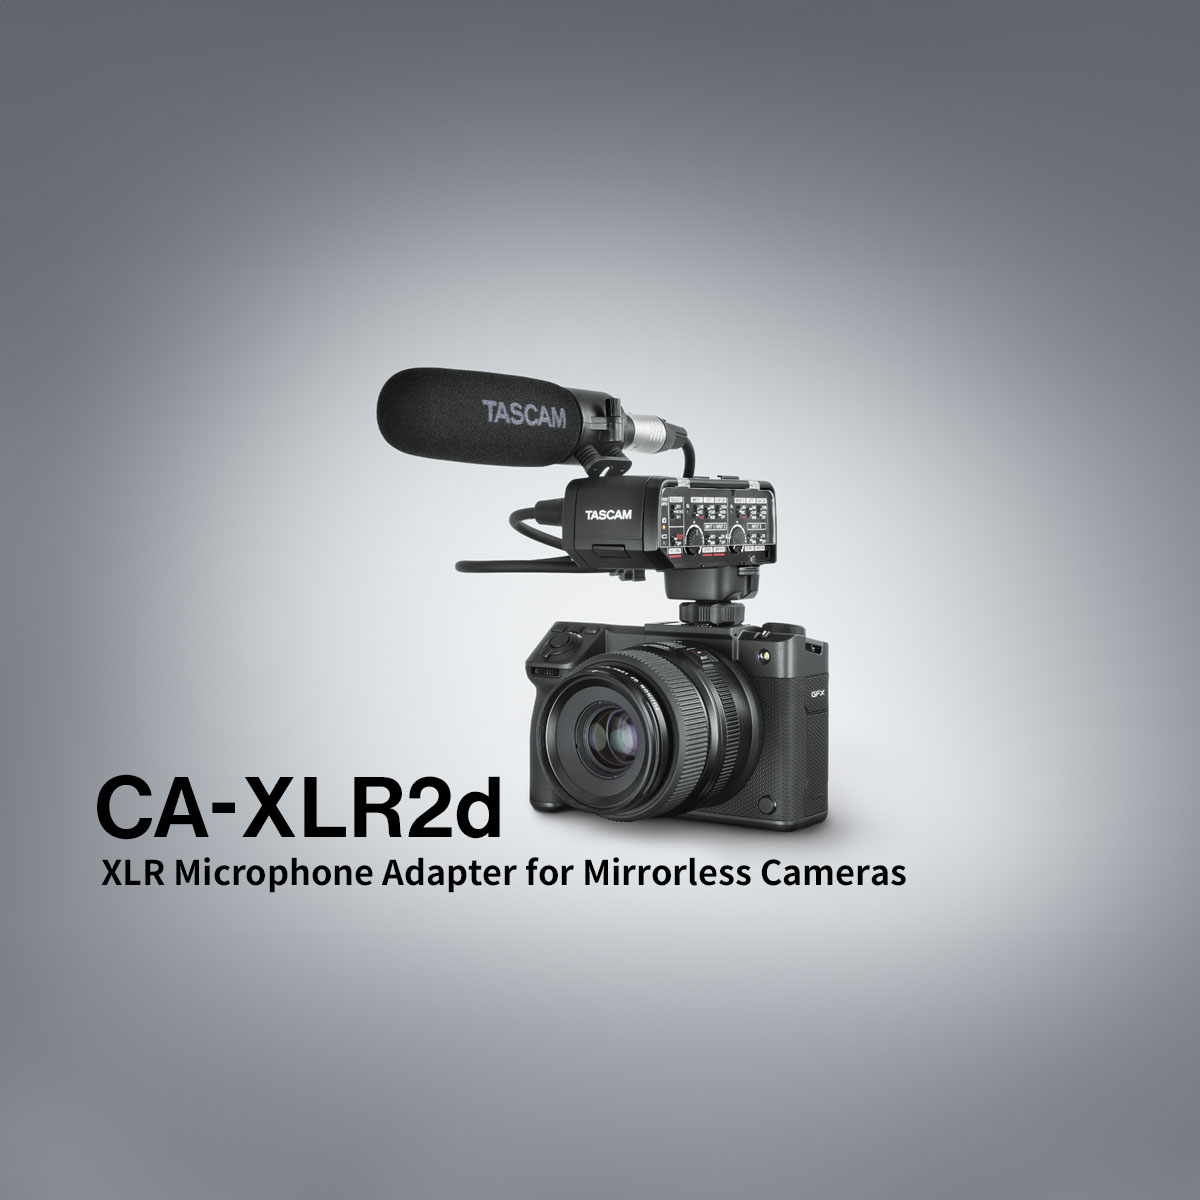 『CA-XLR2d』の動作確認カメラリストを更新